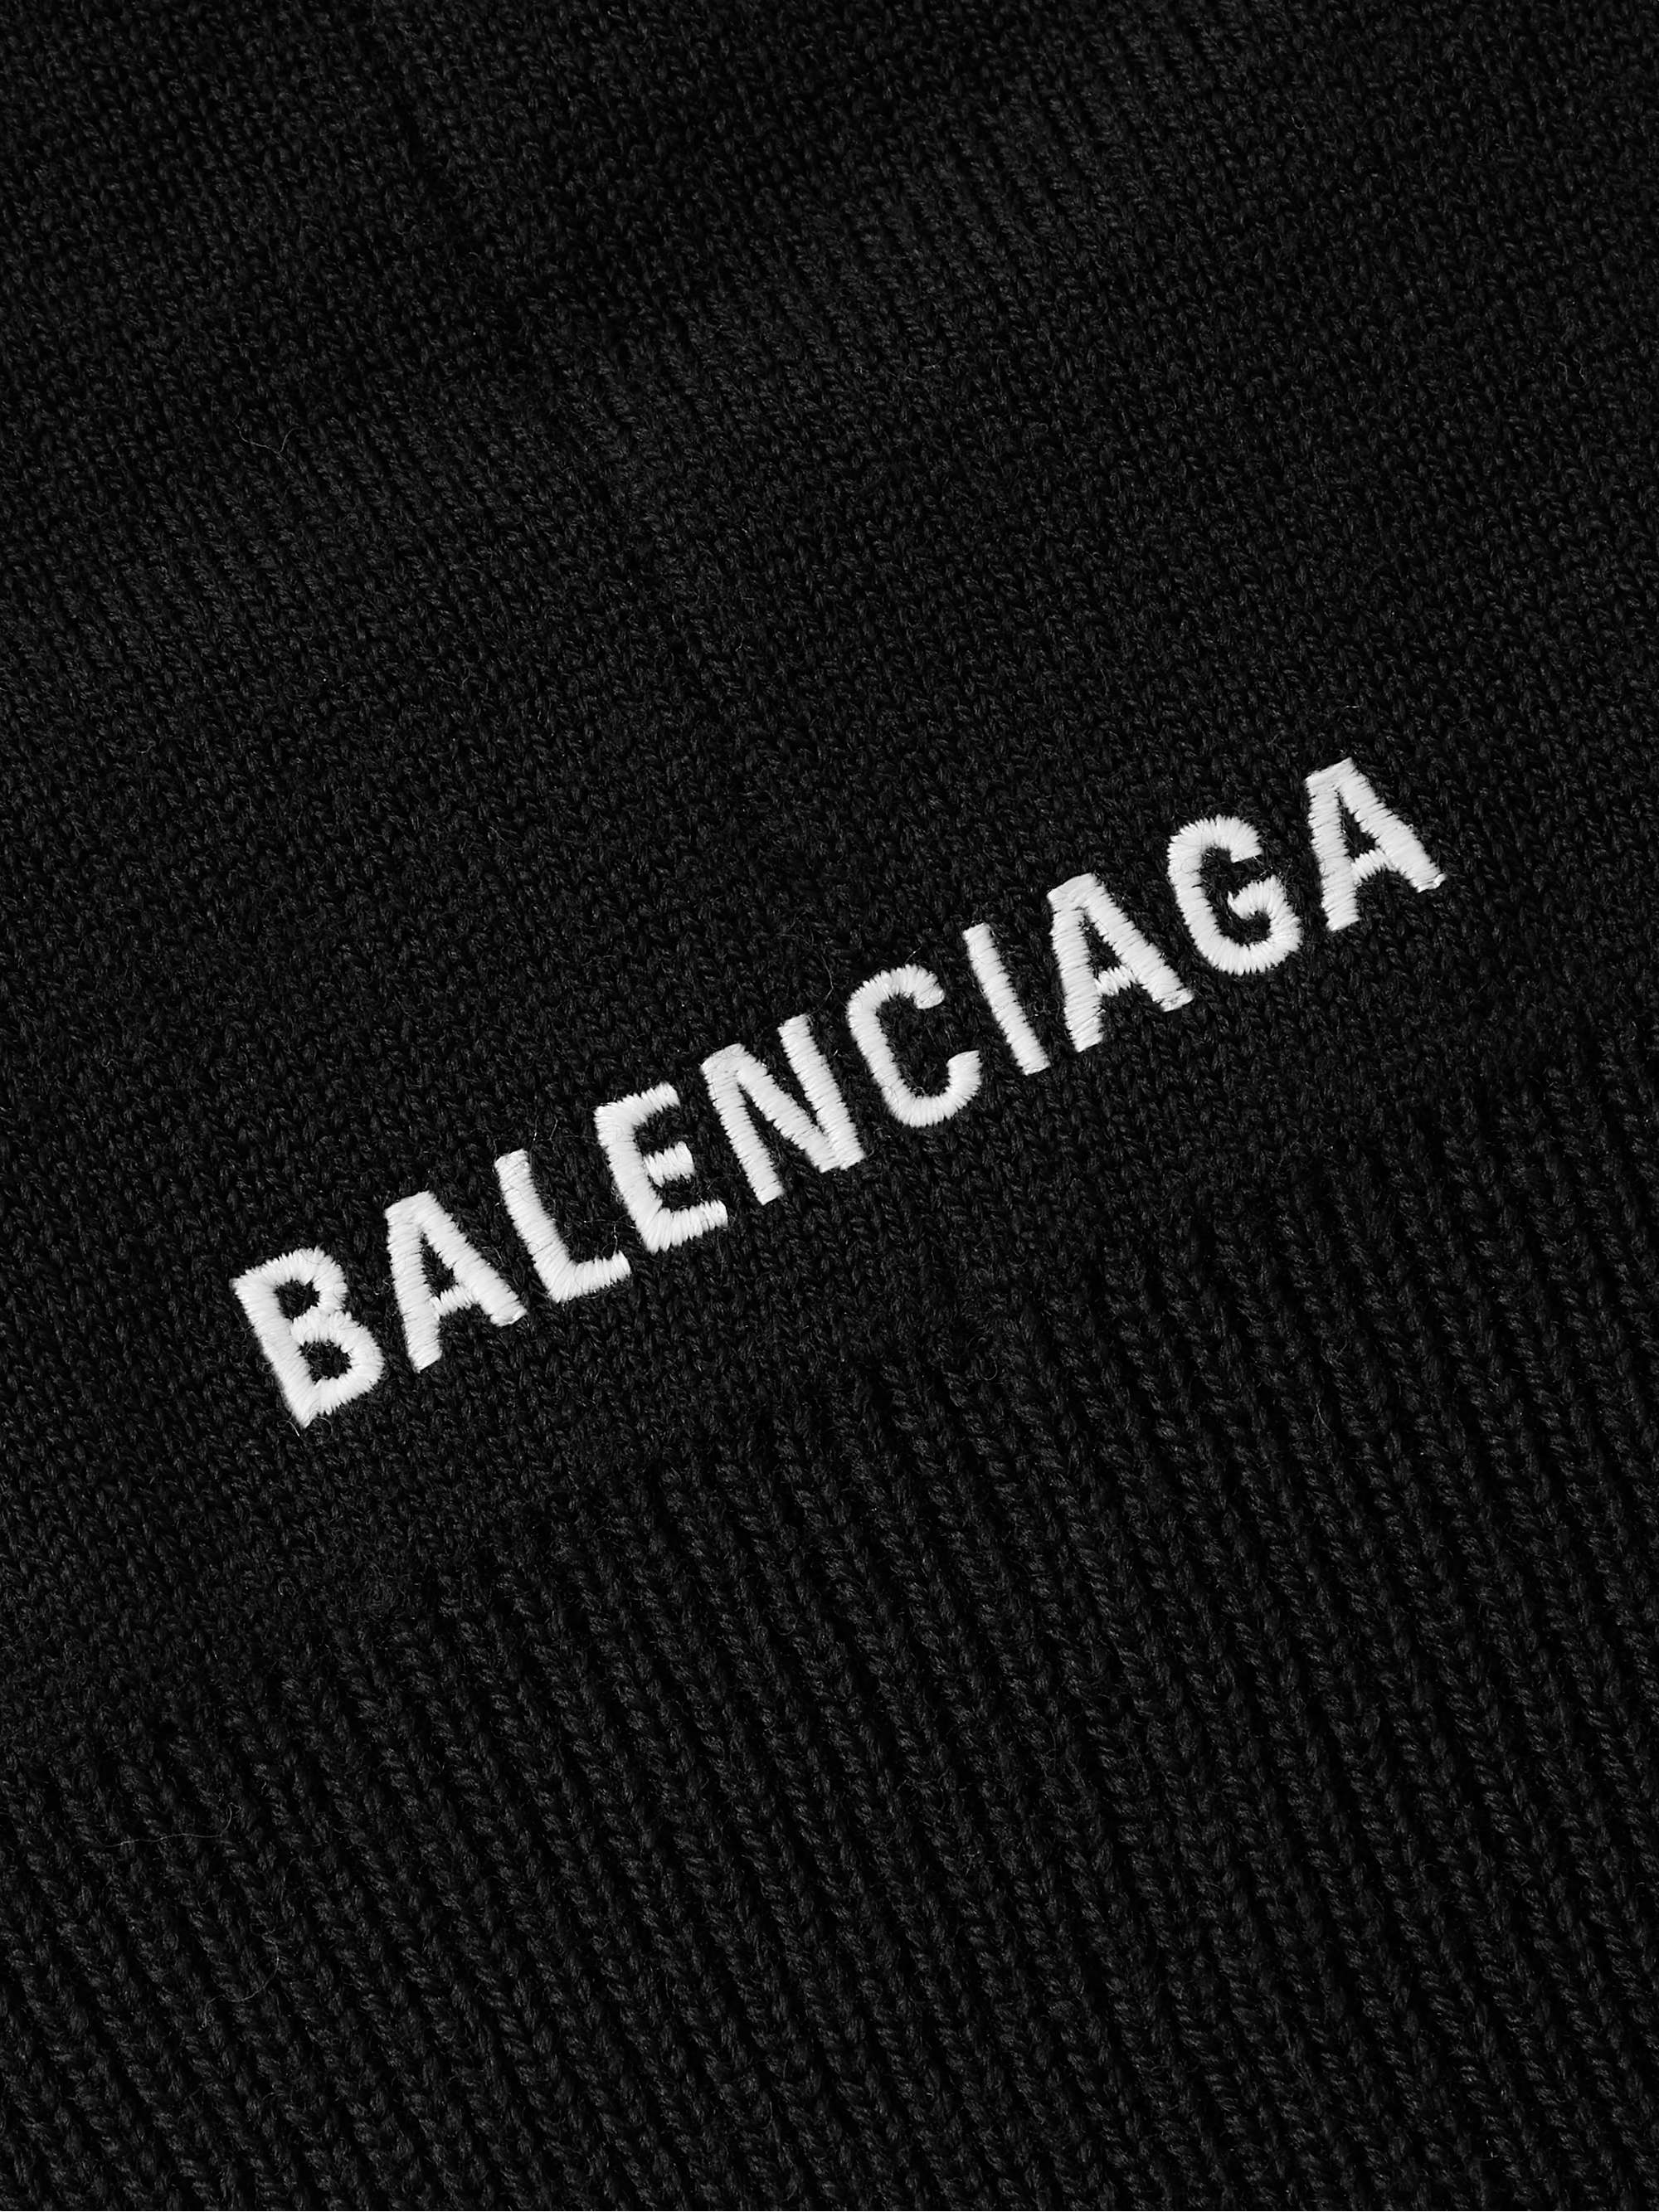 BALENCIAGA Logo-Embroidered Knitted Balaclava